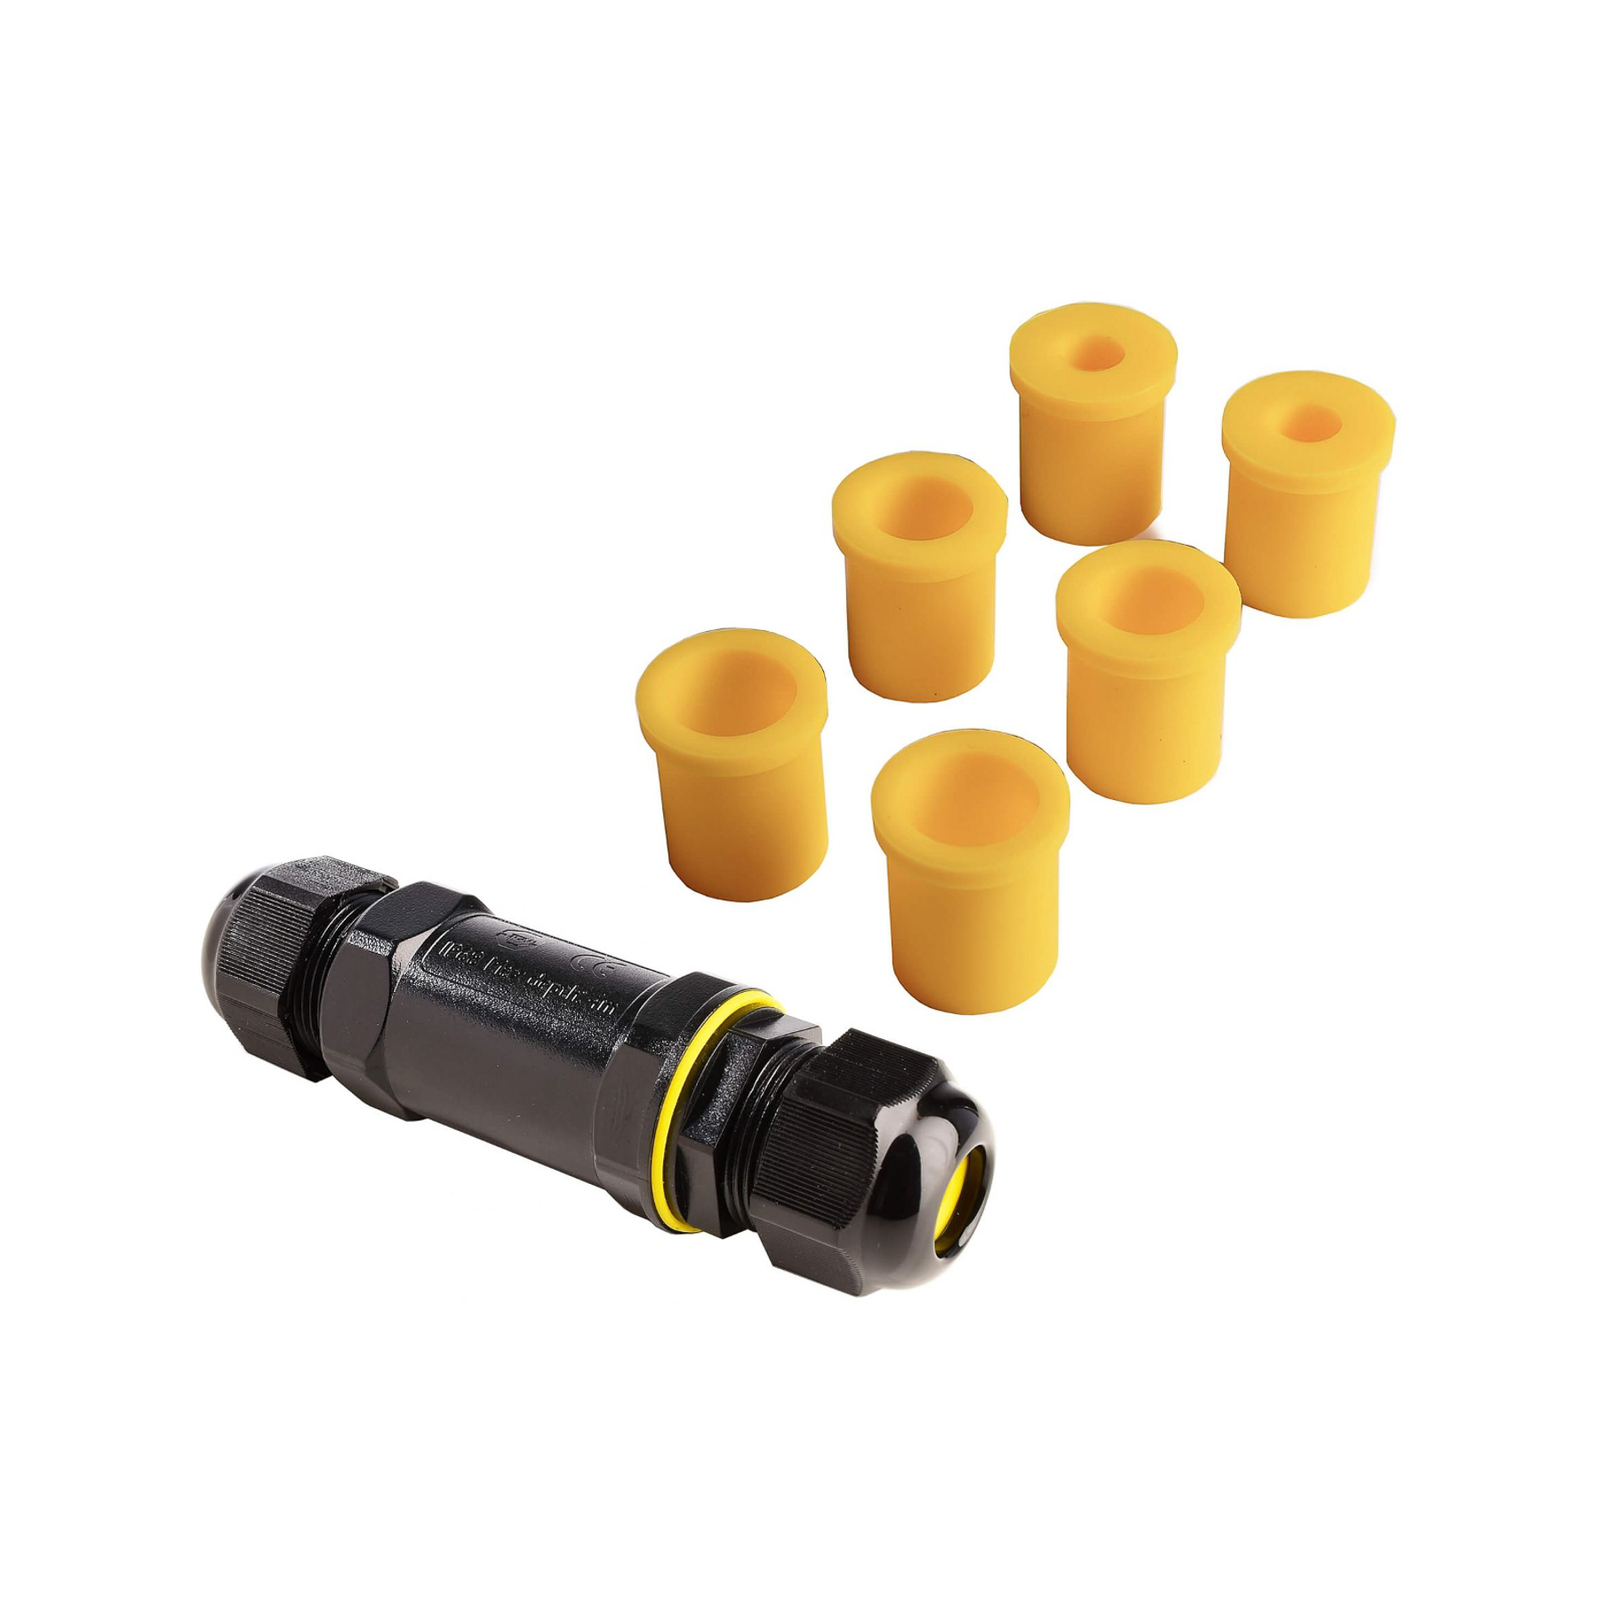 Utendørs flerkabel-kontakter for to kabler, 4-14mm